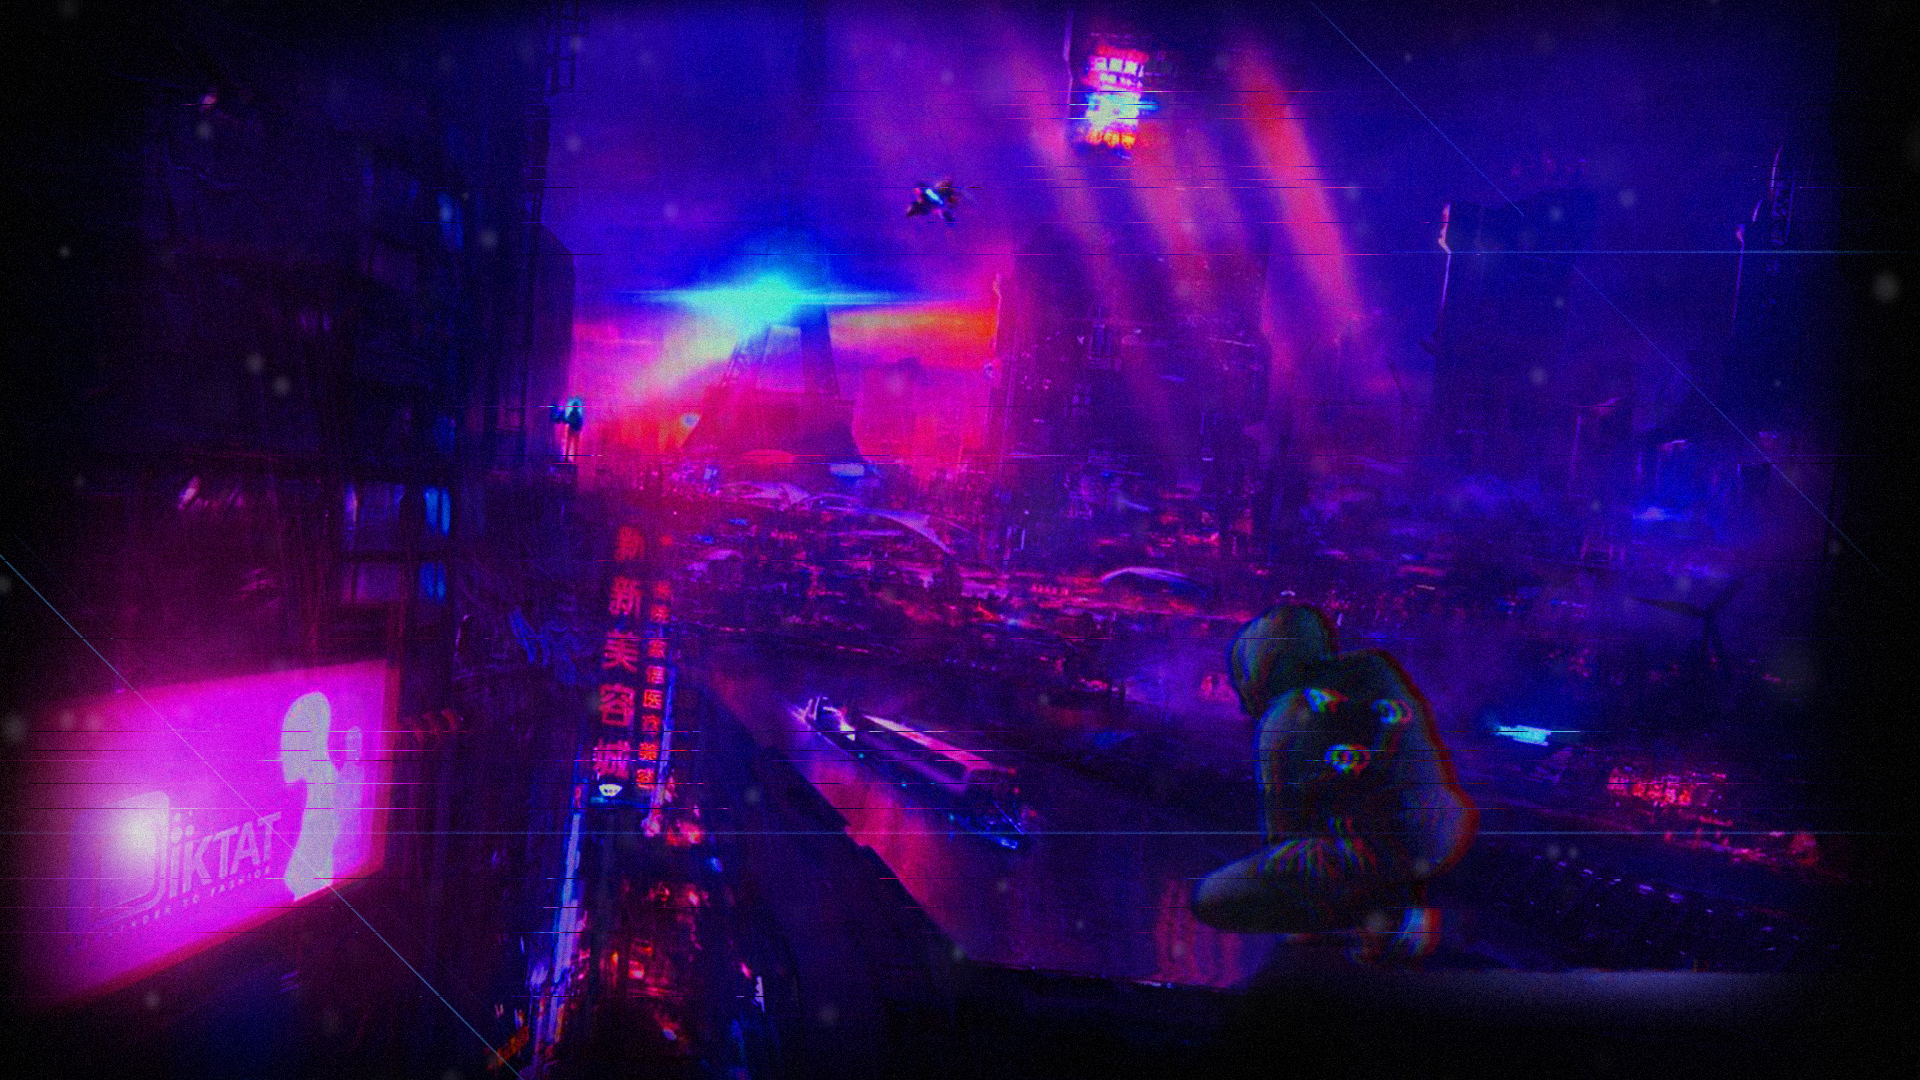 General 1920x1080 cyberpunk technology science fiction neon digital art futuristic colorful